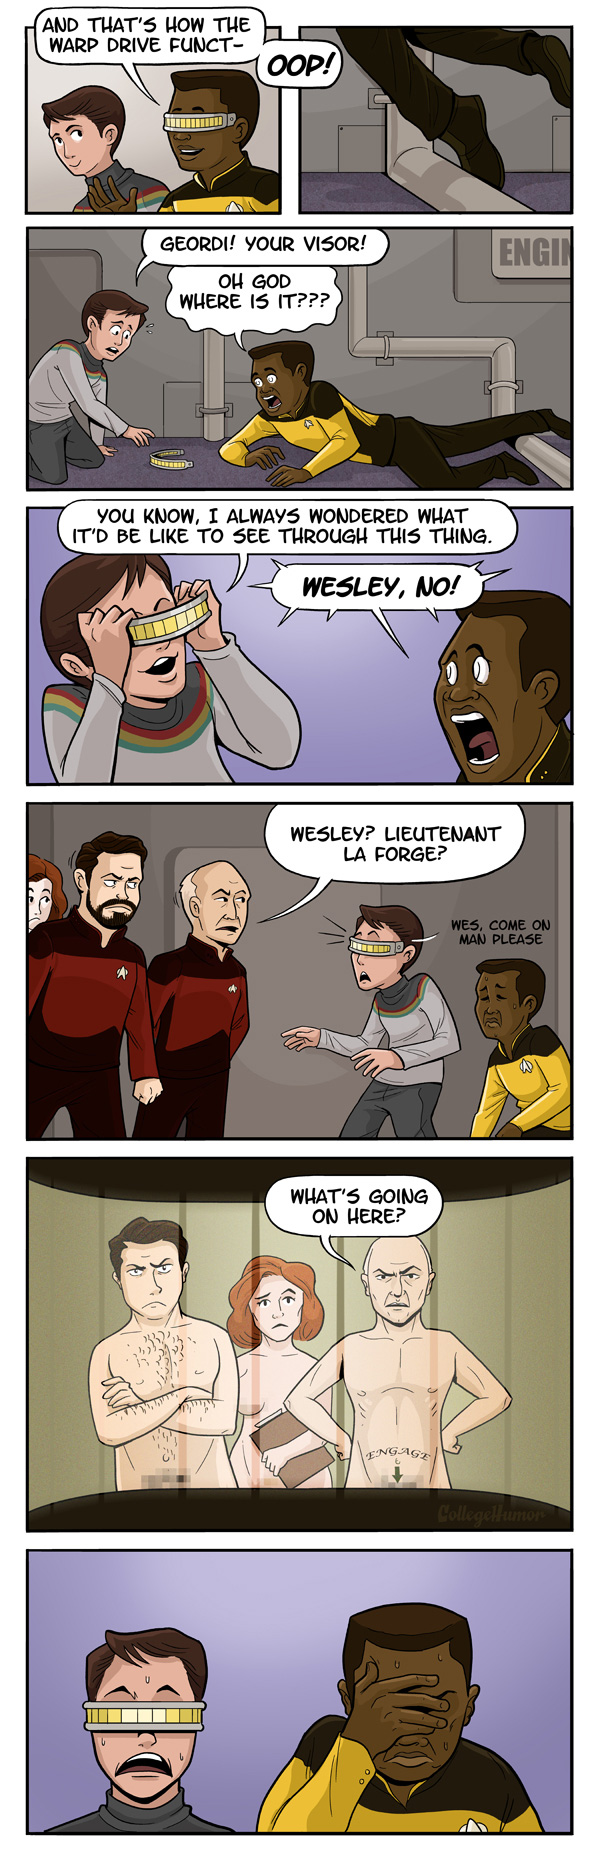 Star Trek Geordi LaForge webcomic